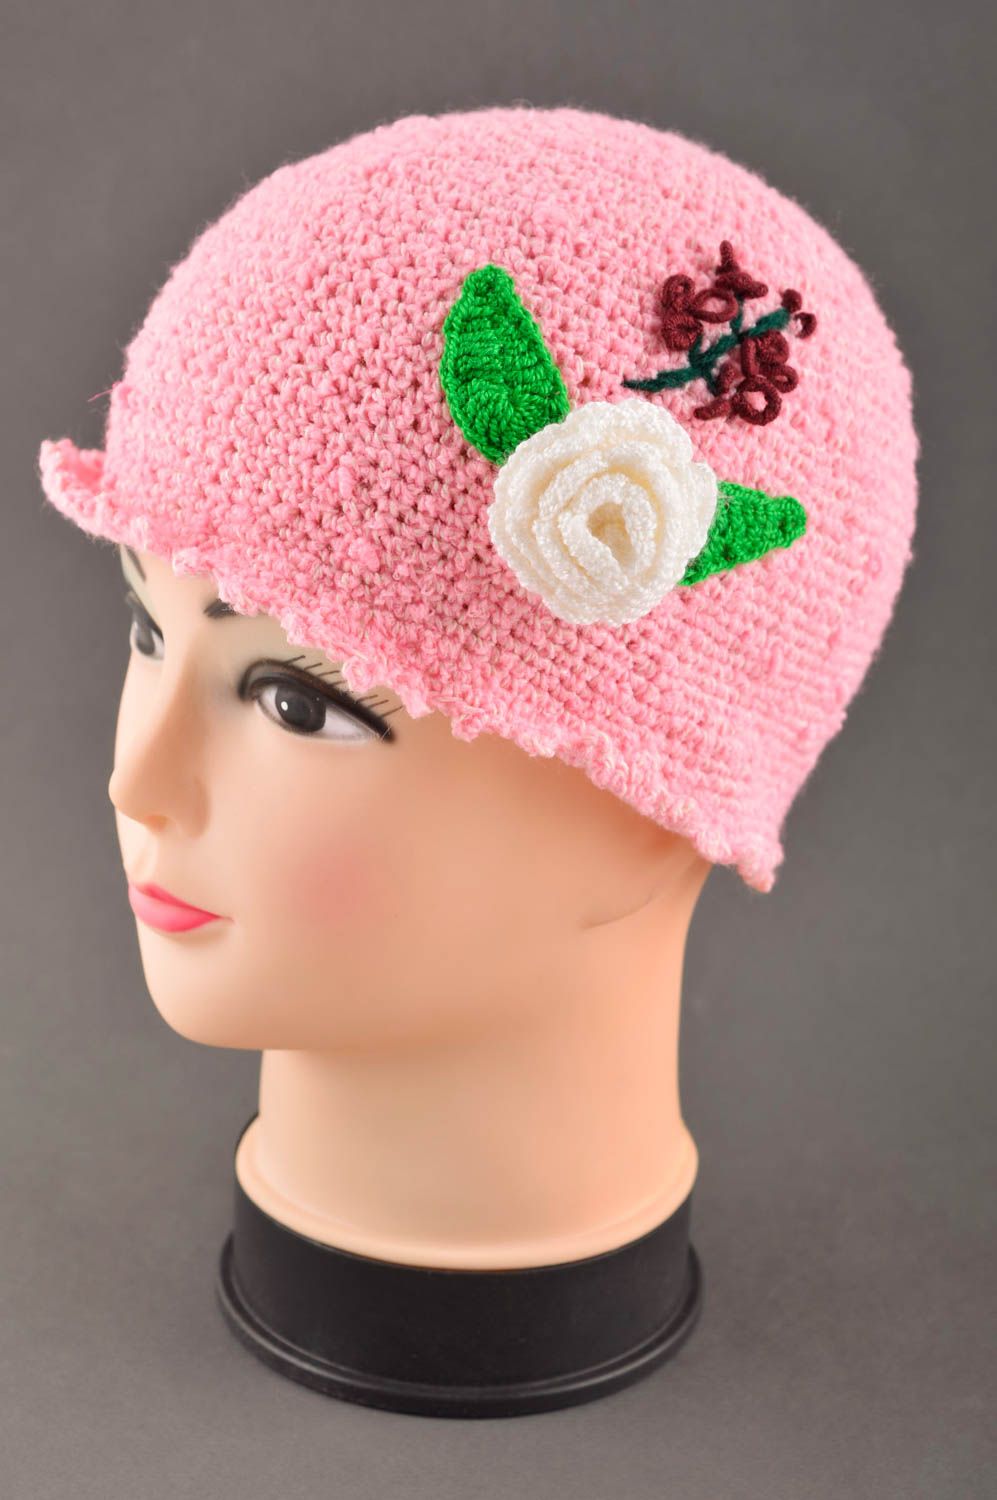 Handmade hat for winter unusual warm hat designer hat for baby gift ideas photo 1